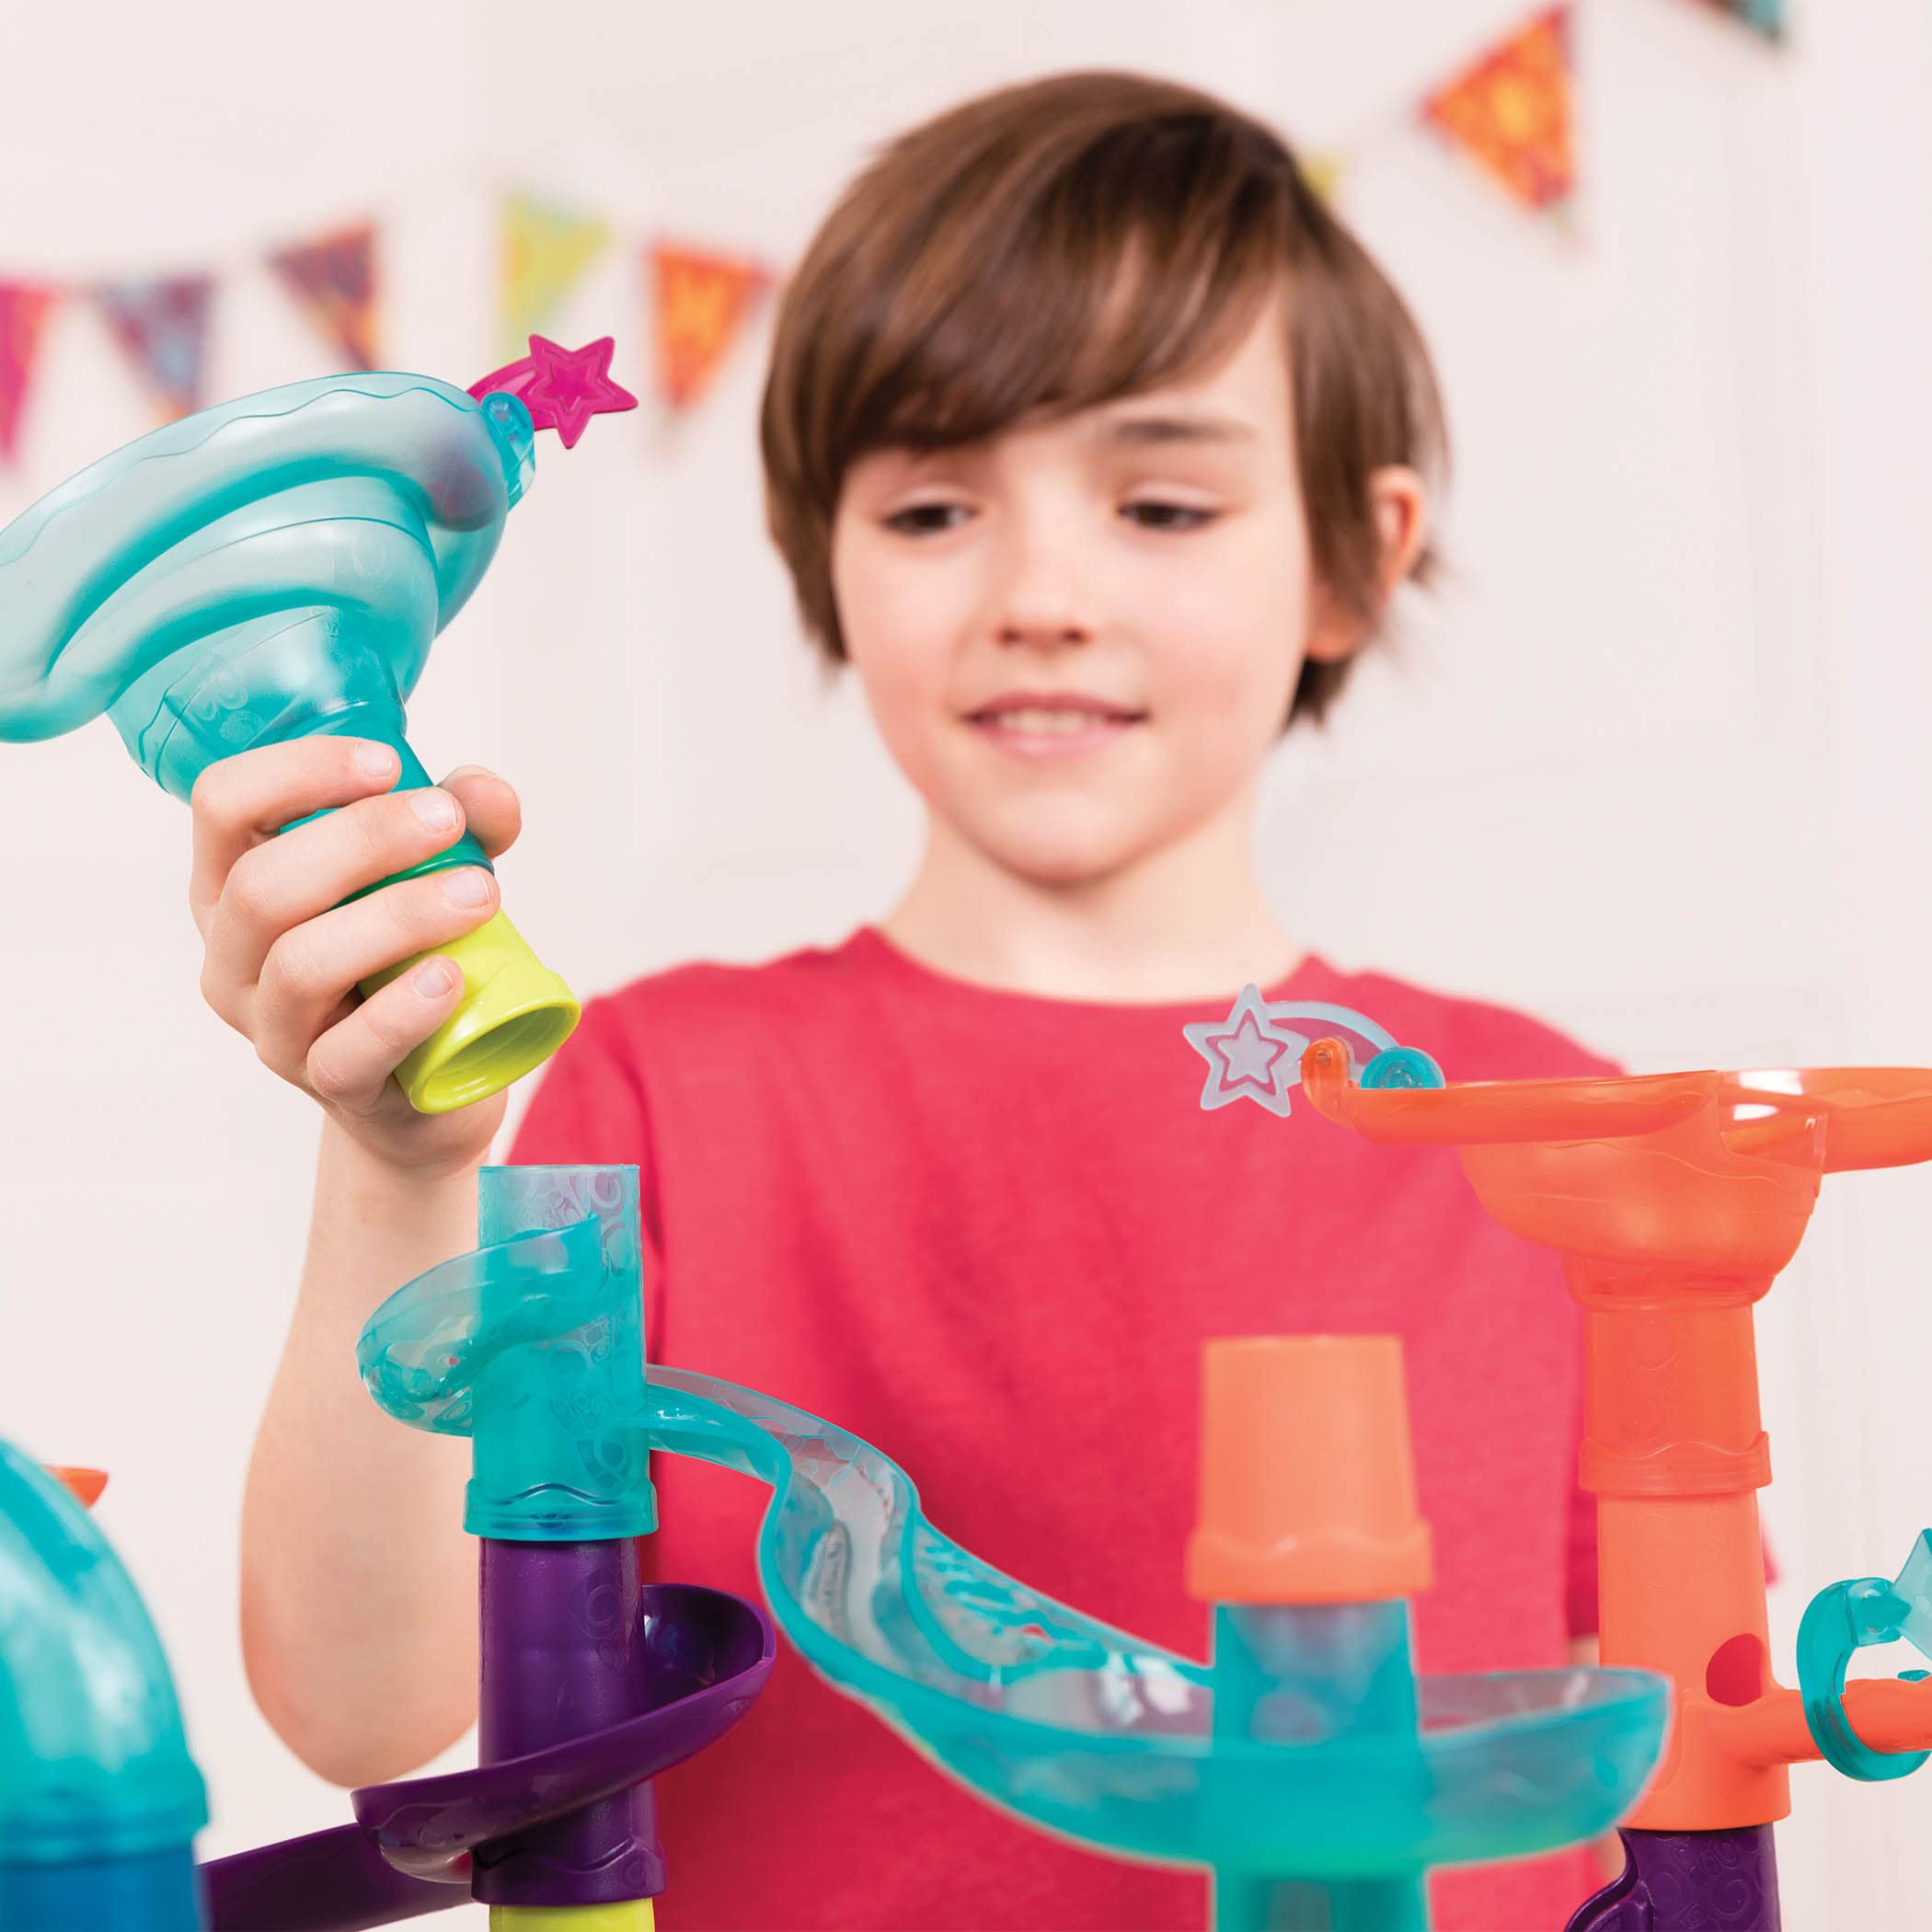 B. toys- Marble-Palooza- Marble Run Set- Developmental STEM Playset- 38-Piece Educational Building Toy- Marble Maze for Kids – 3 Years +